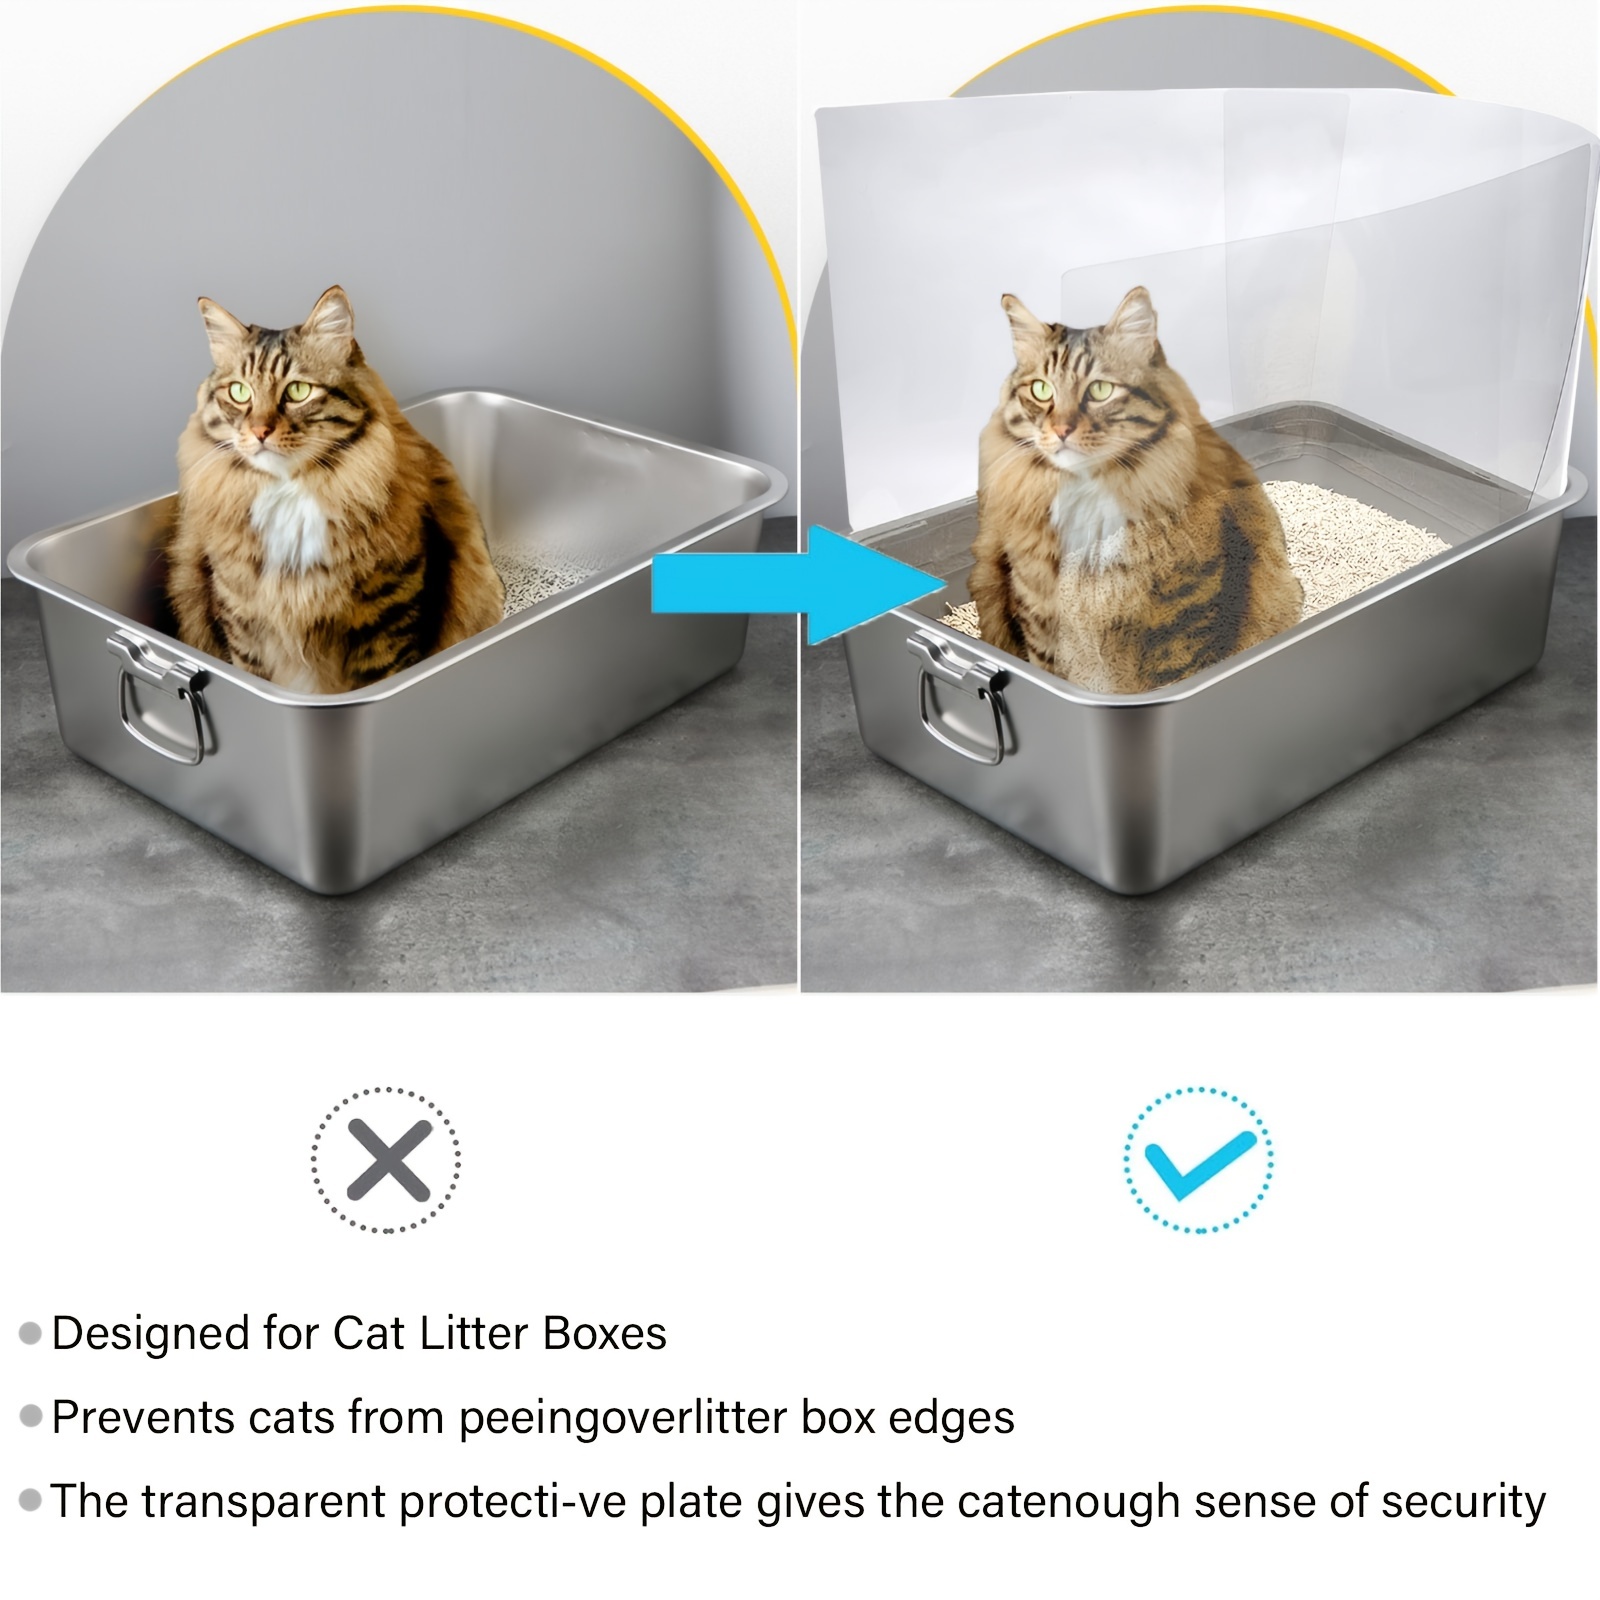 Cat Litter Box Pee Shields Transparent Easy Clean Litter Box - Temu